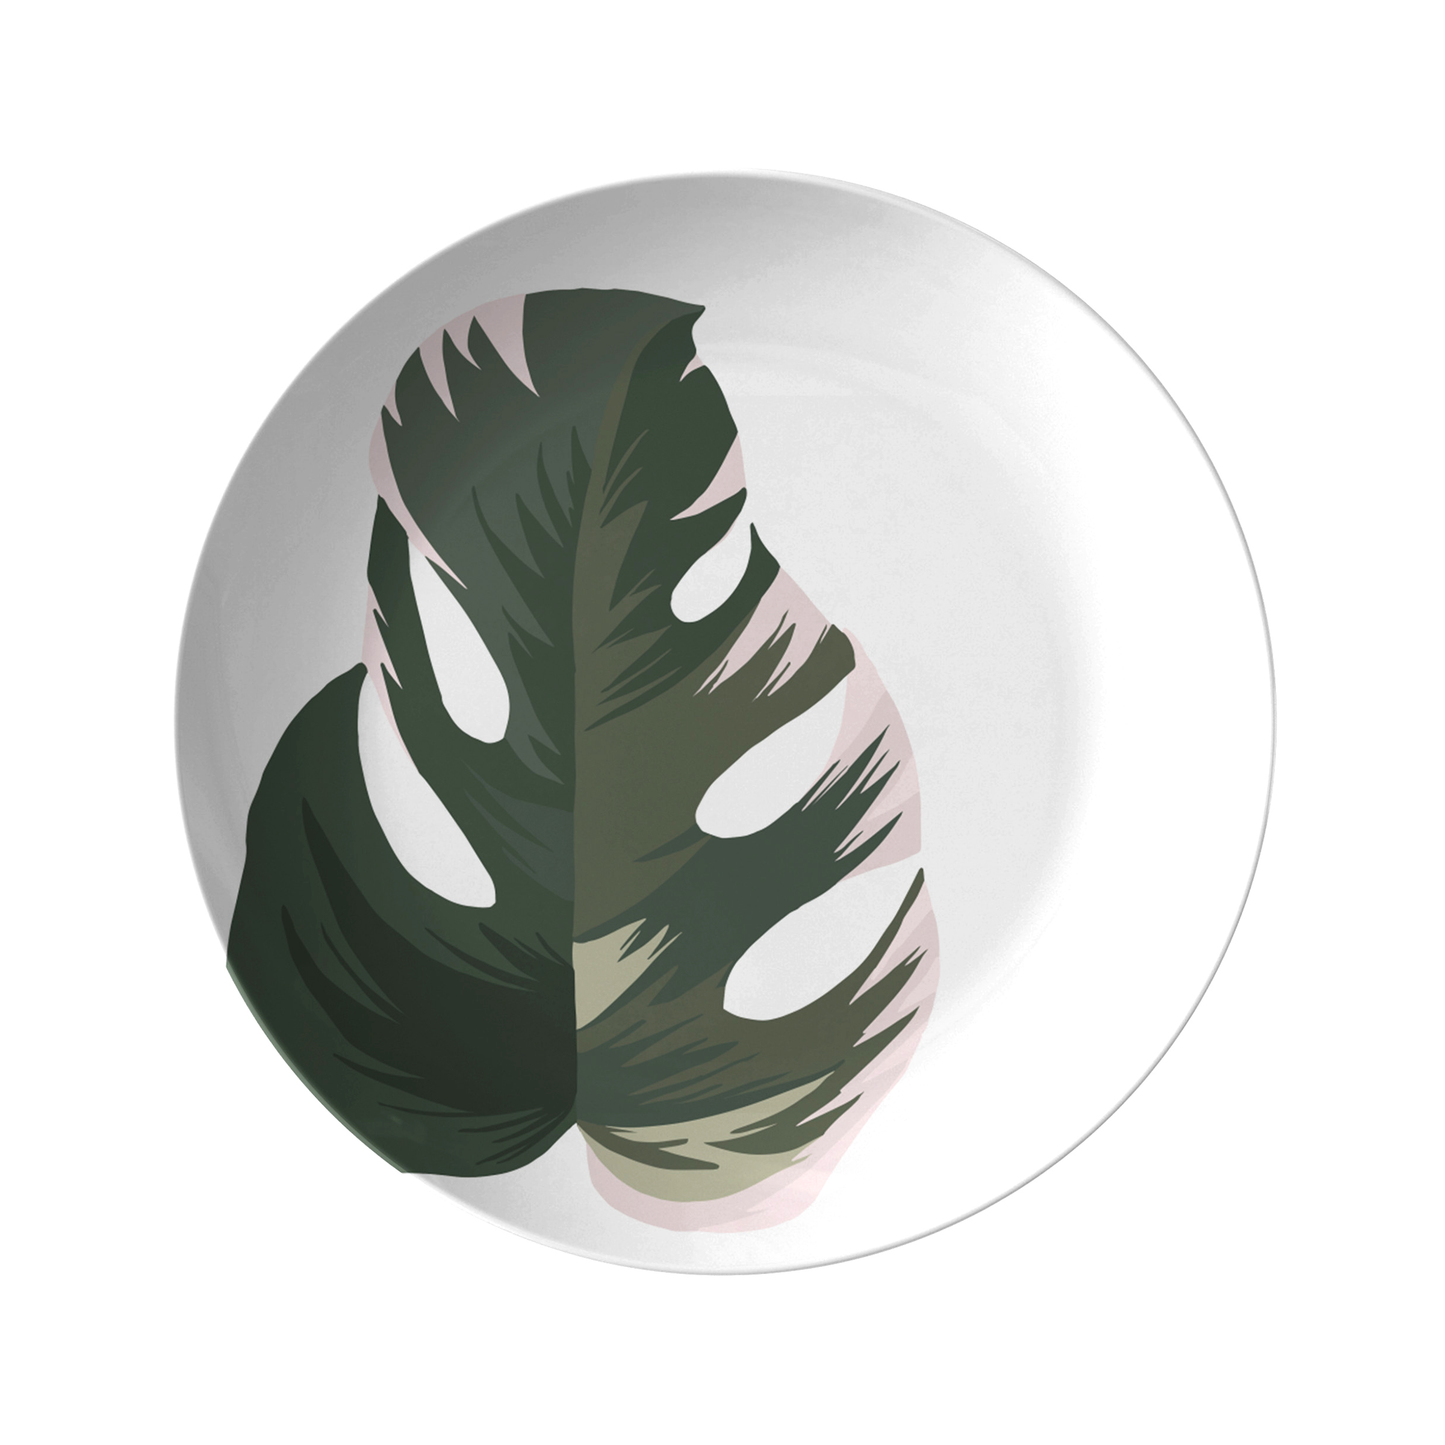 Monstera Leaf Luxury Plastic Plates, Set of 4, Green & White